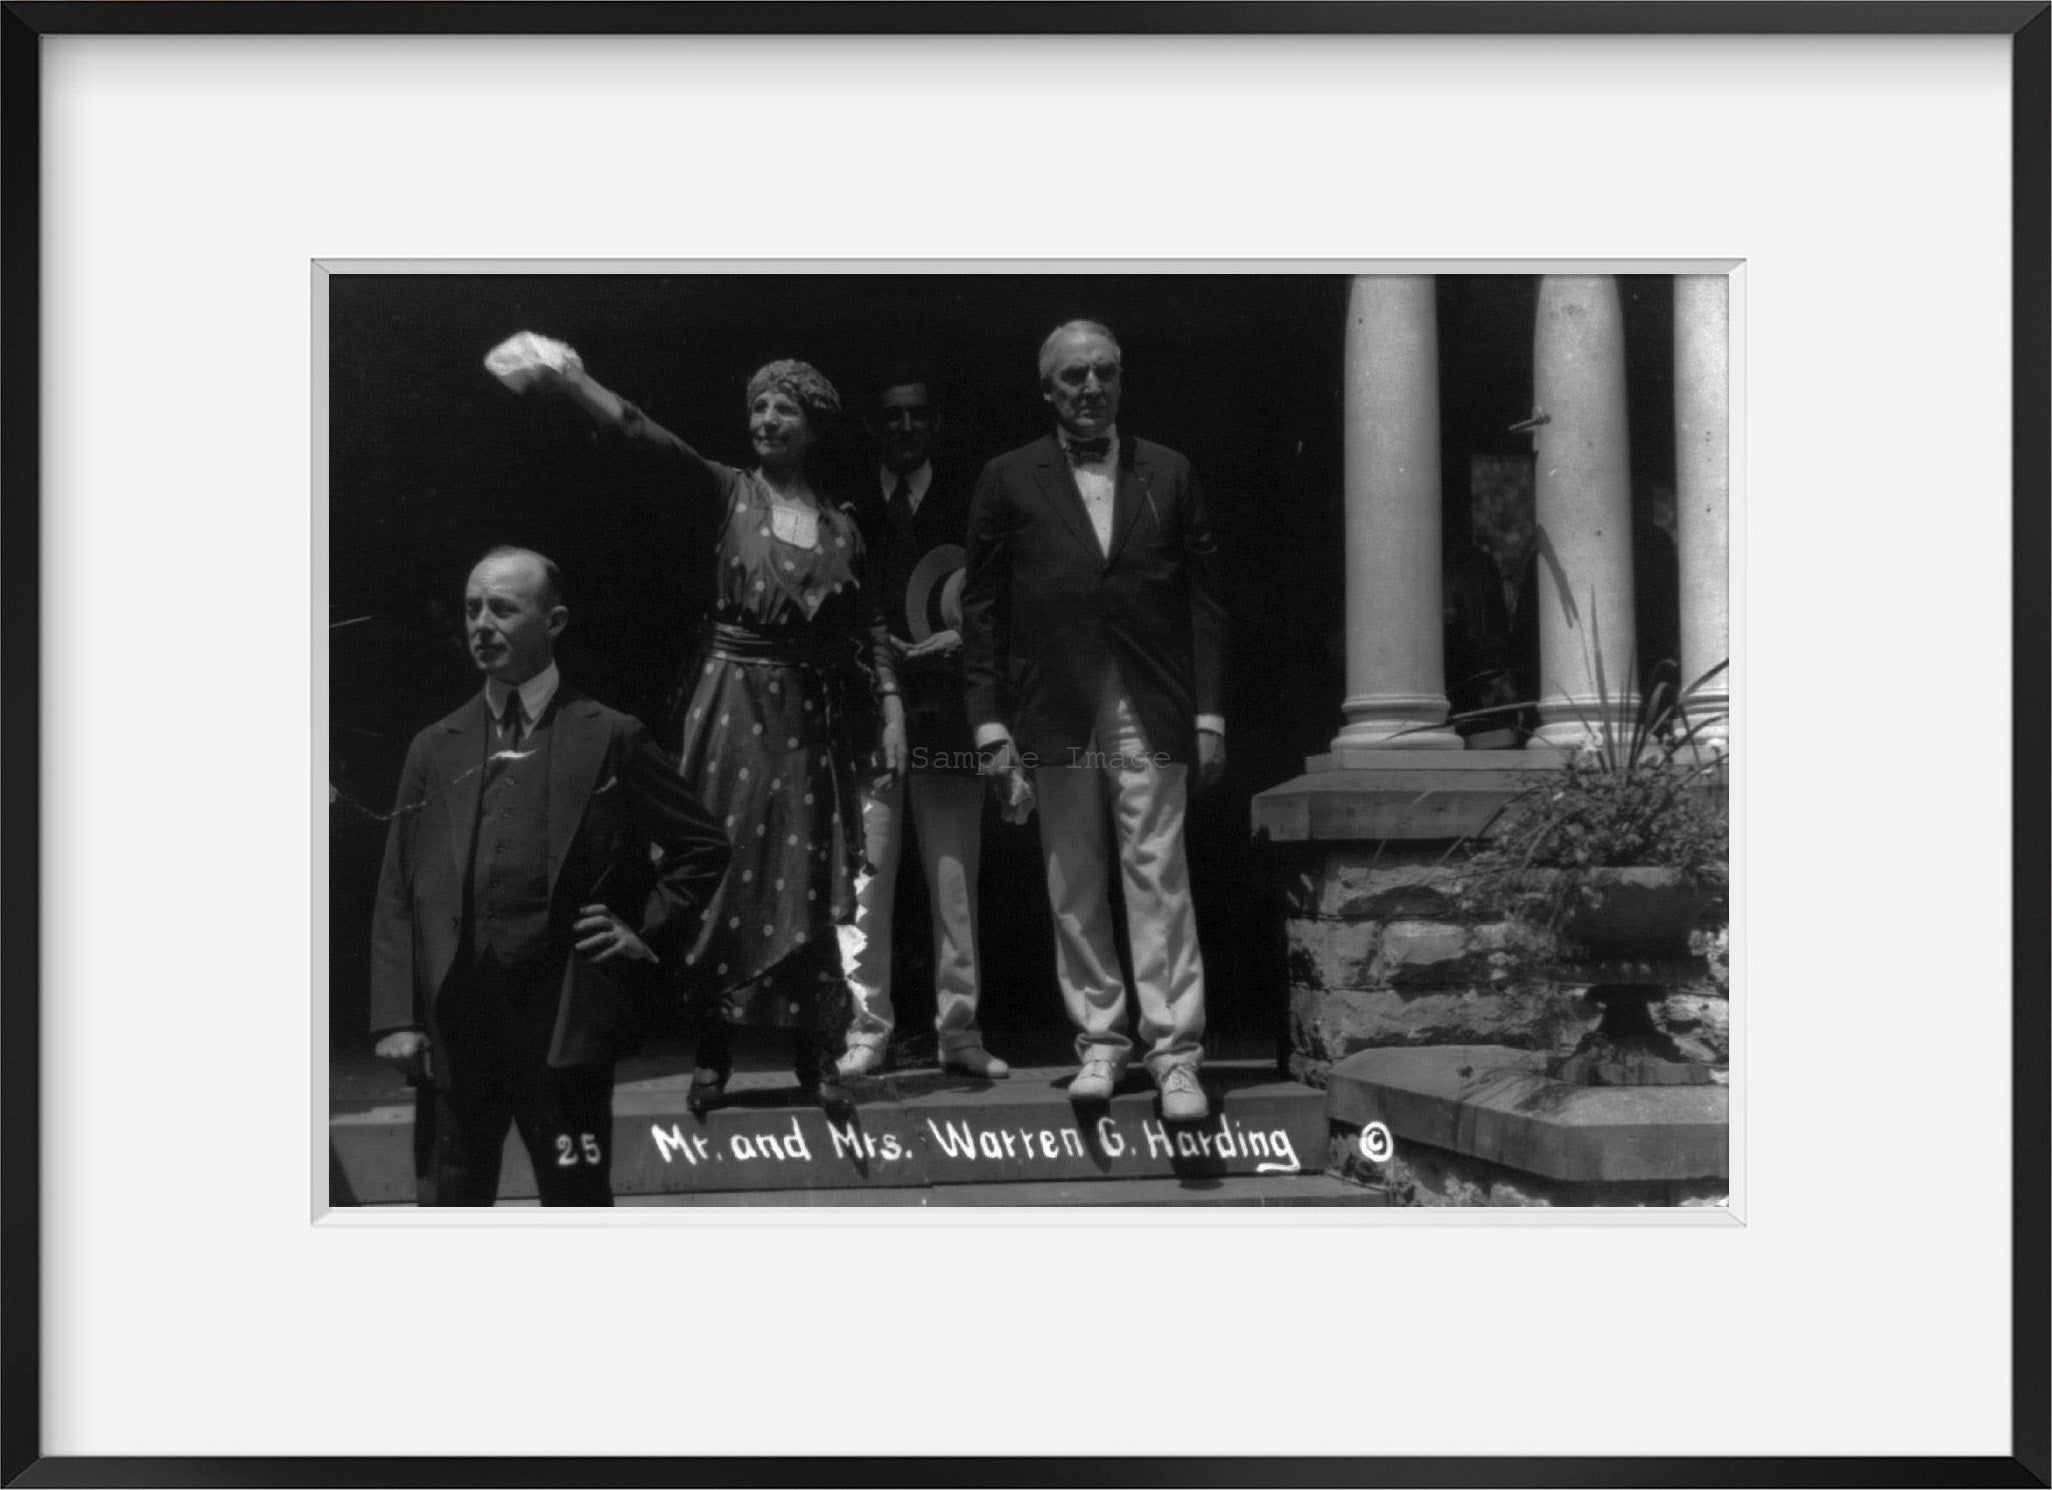 c1920 photograph of Mr. & Mrs. Warren G. Harding standing on steps of building